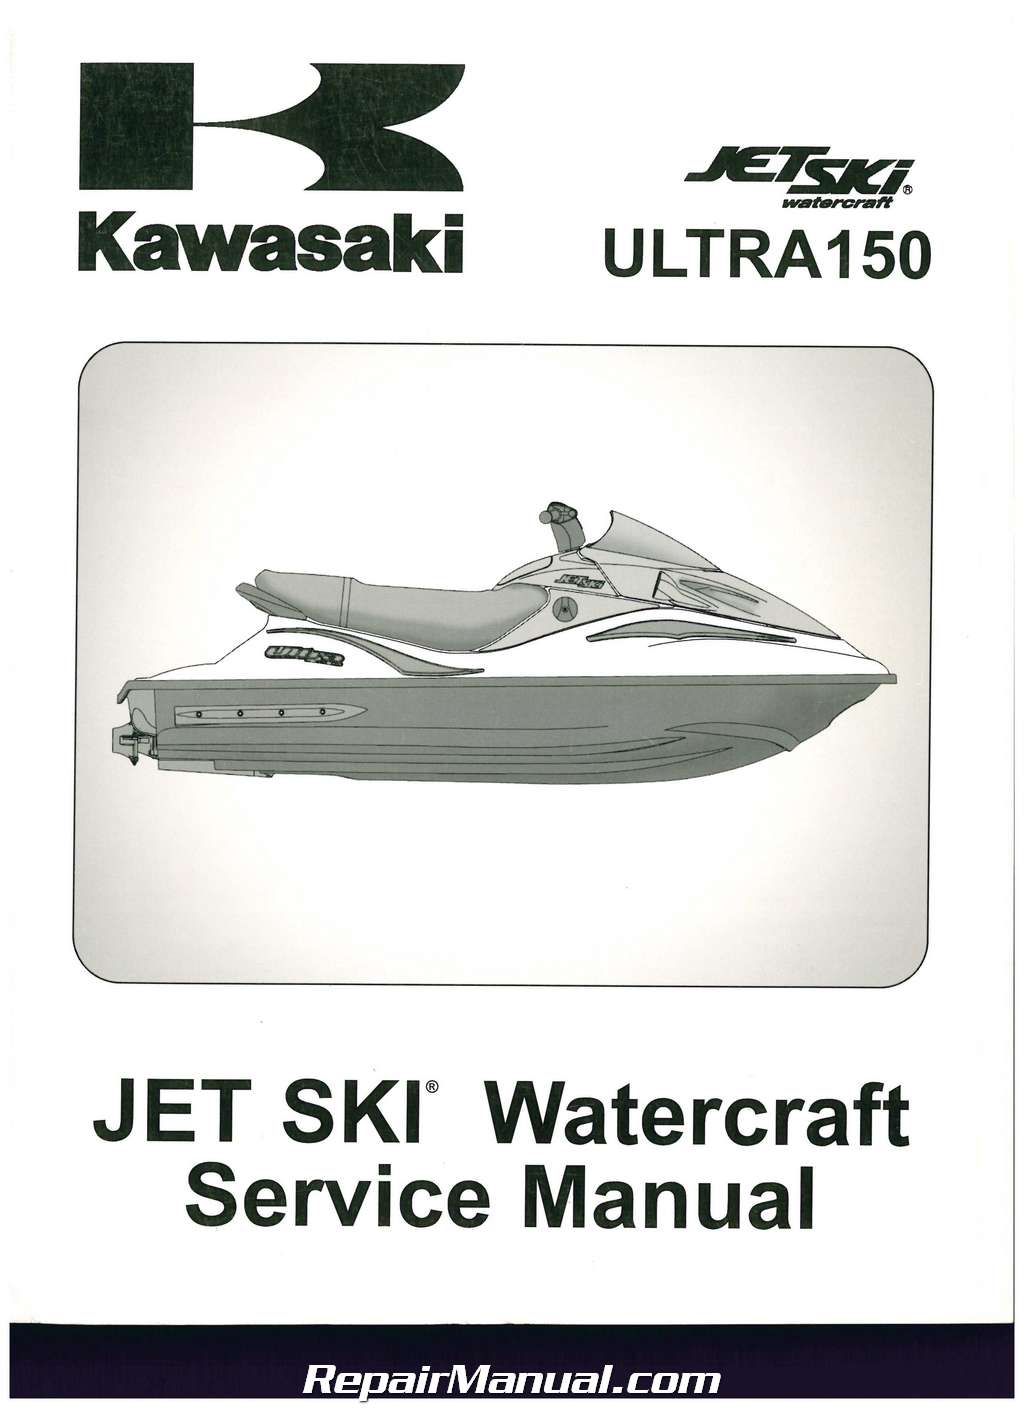 Starter Relay Solenoid for Kawasaki JH1200 Jetski Ultra 150 1999 2000 2001 2002 